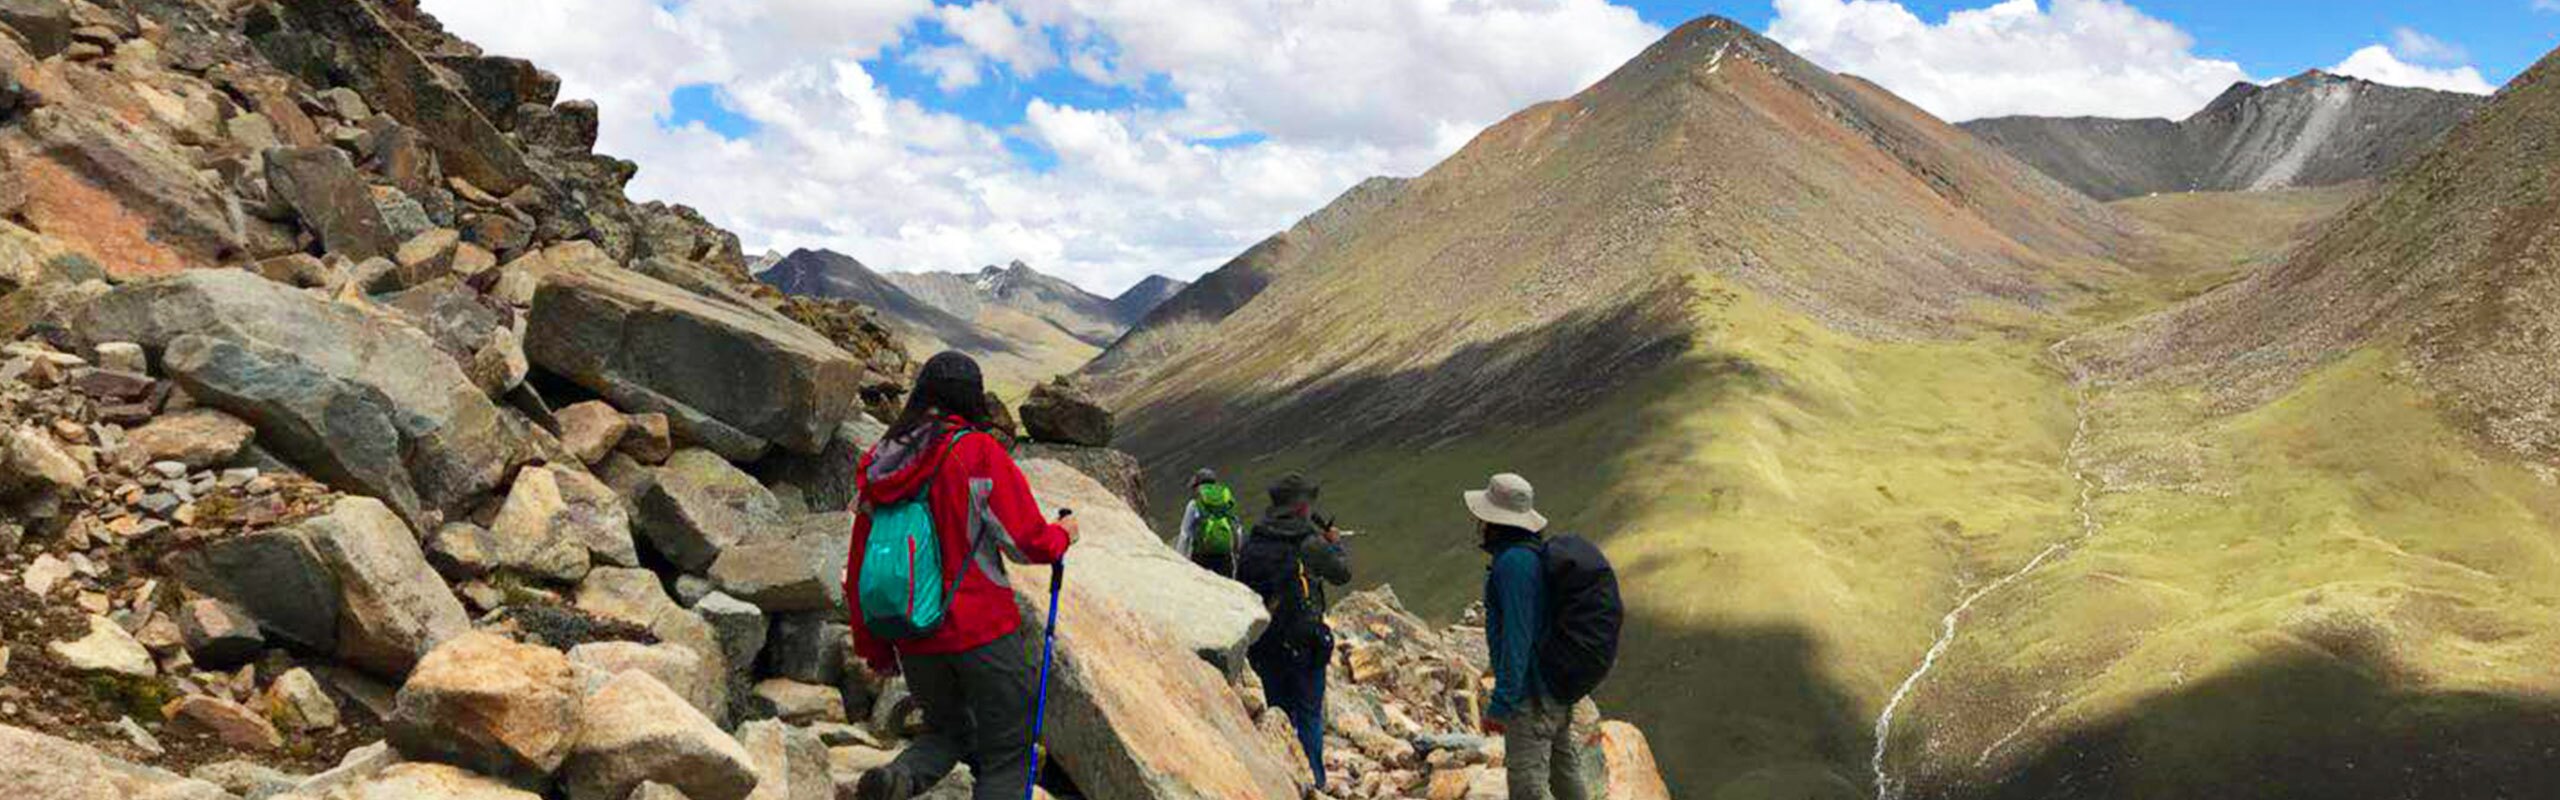 9-Day Tibet Tour with Lhasa and a Ganden–Samye Trek